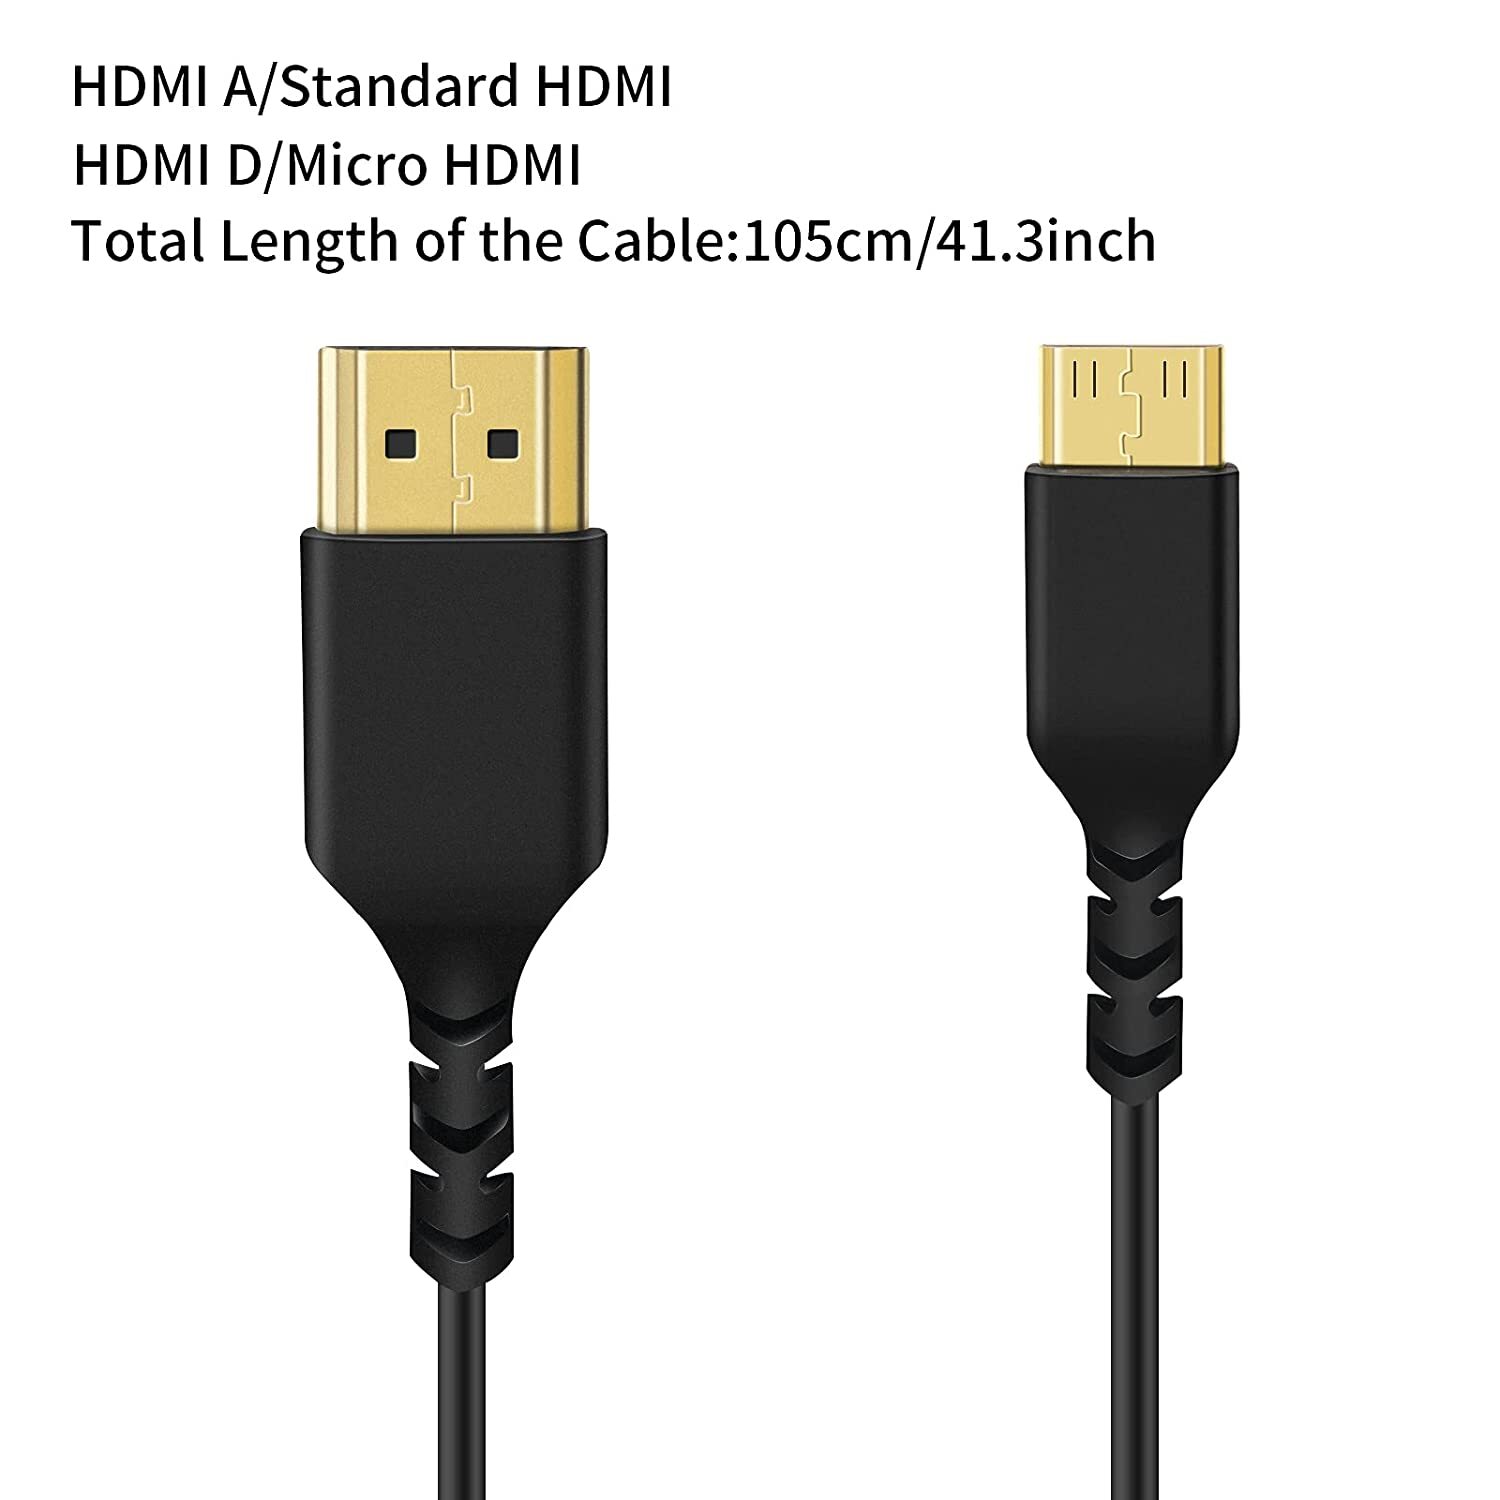 sjækel græsplæne arm ANDYCINE Reflex Ultra-Thin Mini HDMI to HDMI Cable 2.5FT Flexible Slim HDMI  Cord 2.5mm Cord Diameter Support High Speed 3D,4K,DCI 4k for DSLR  Camera,Gimbal HDTV, Gimbals